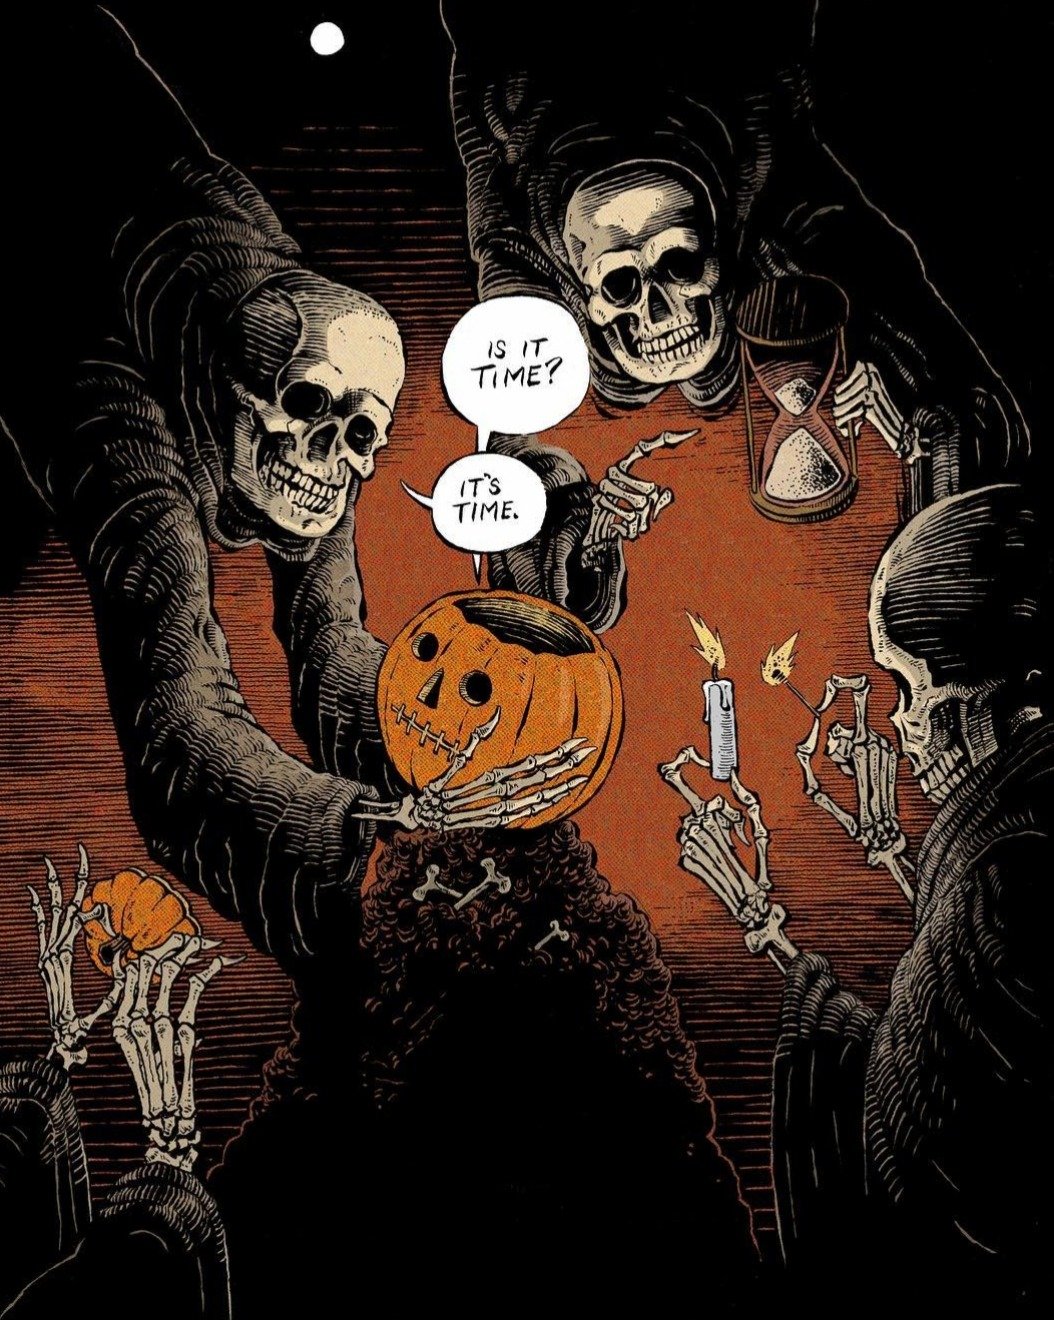 Grunge Halloween Aesthetic: Creepy and Creative